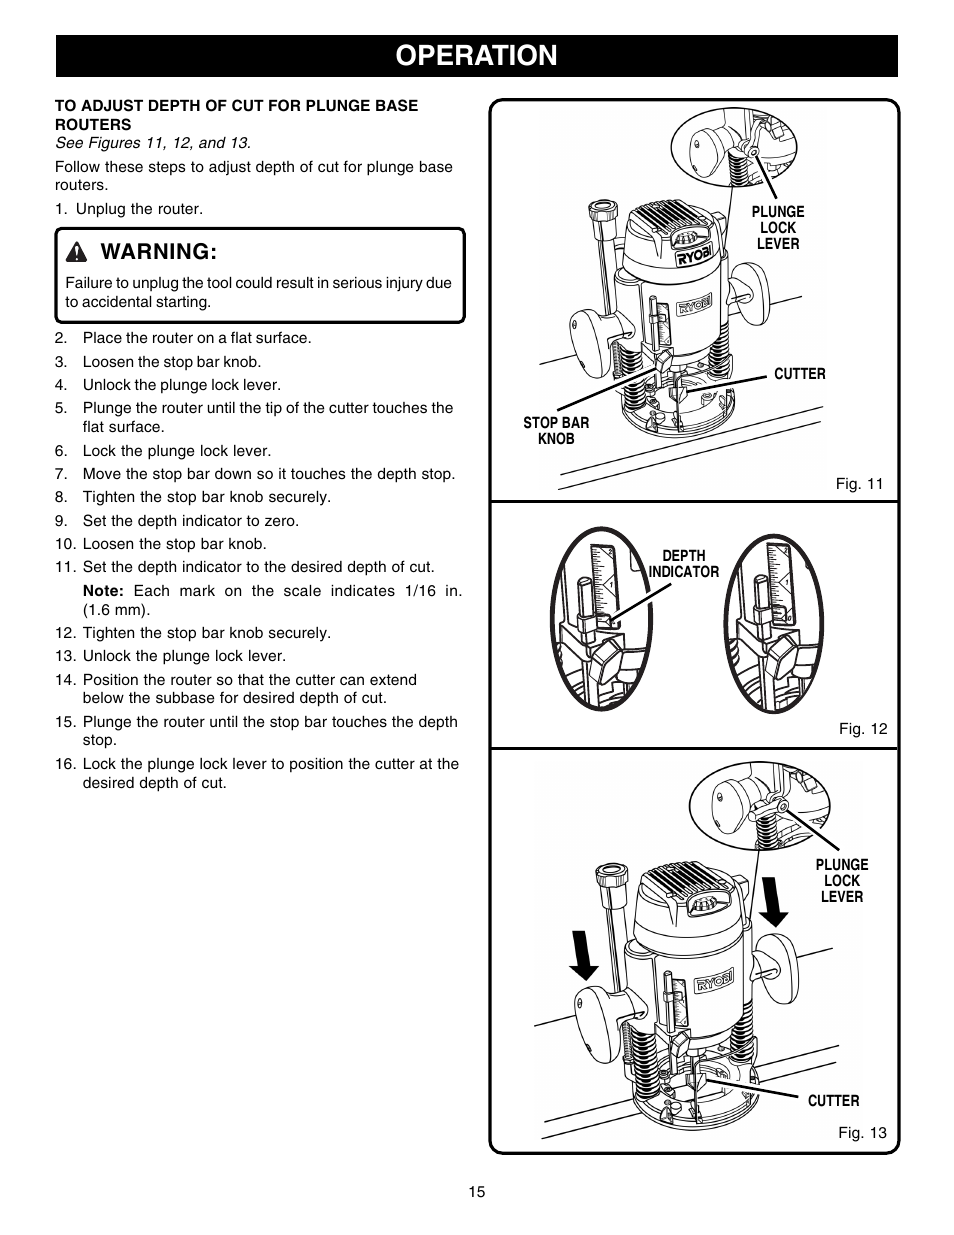 Operation, Warning | Ryobi R181FB1 User Manual | Page 15 / 24